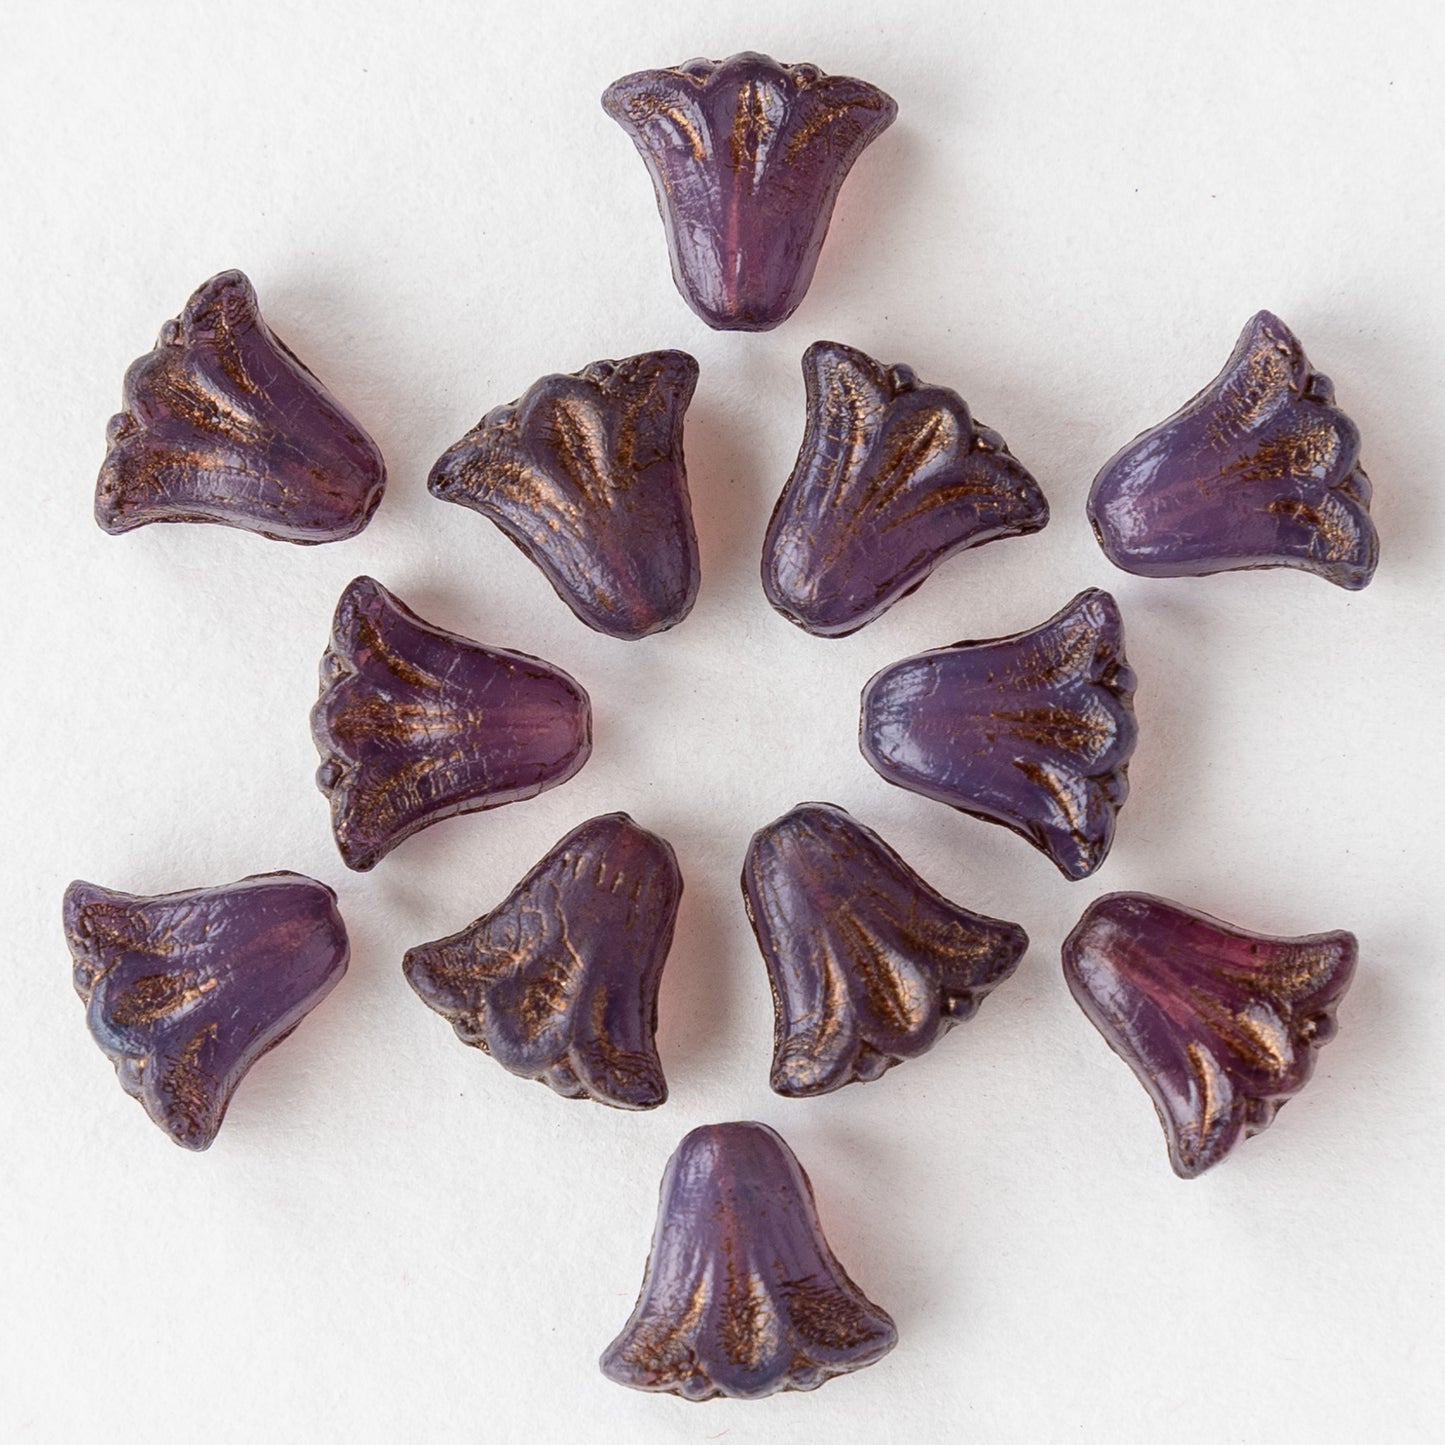 9x10mm Lily / Tulip Flower Beads - Purple Opaline with Dark Brown Wash - 15 Beads